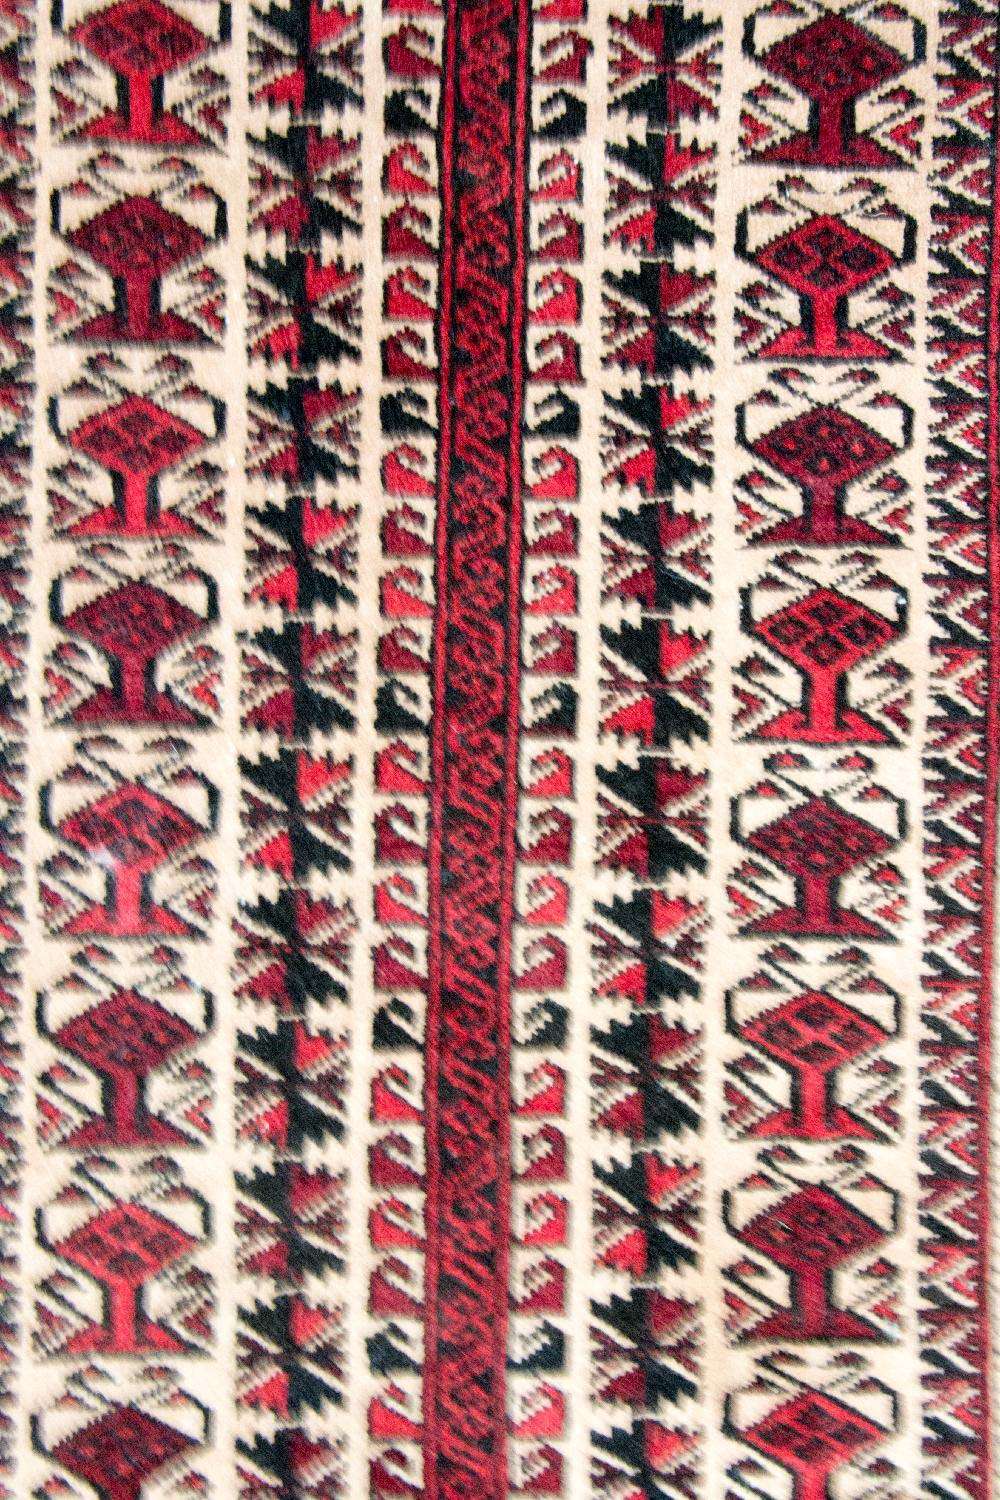 Baluch-tæppe - 129 x 93 cm - rød